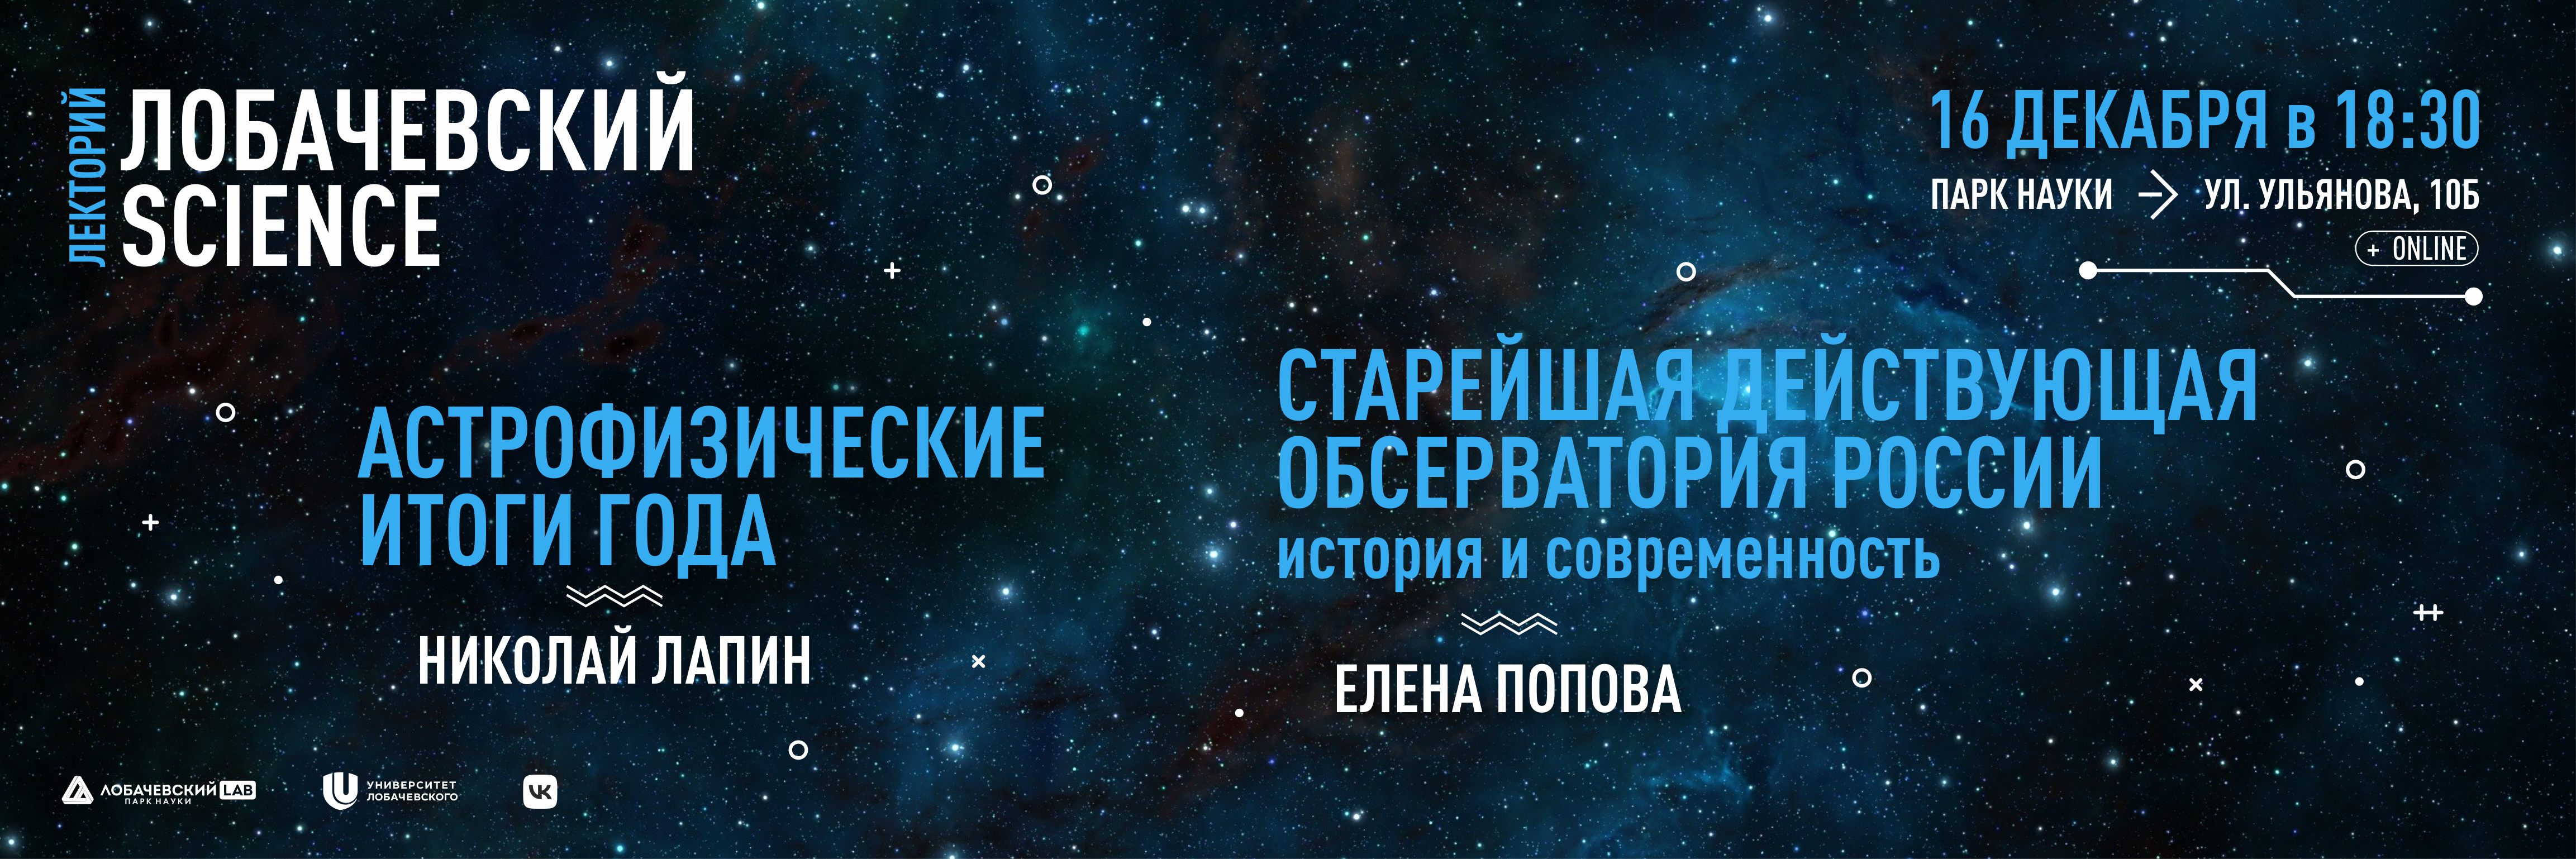 Лобачевский Science: астрофизика и астрономия